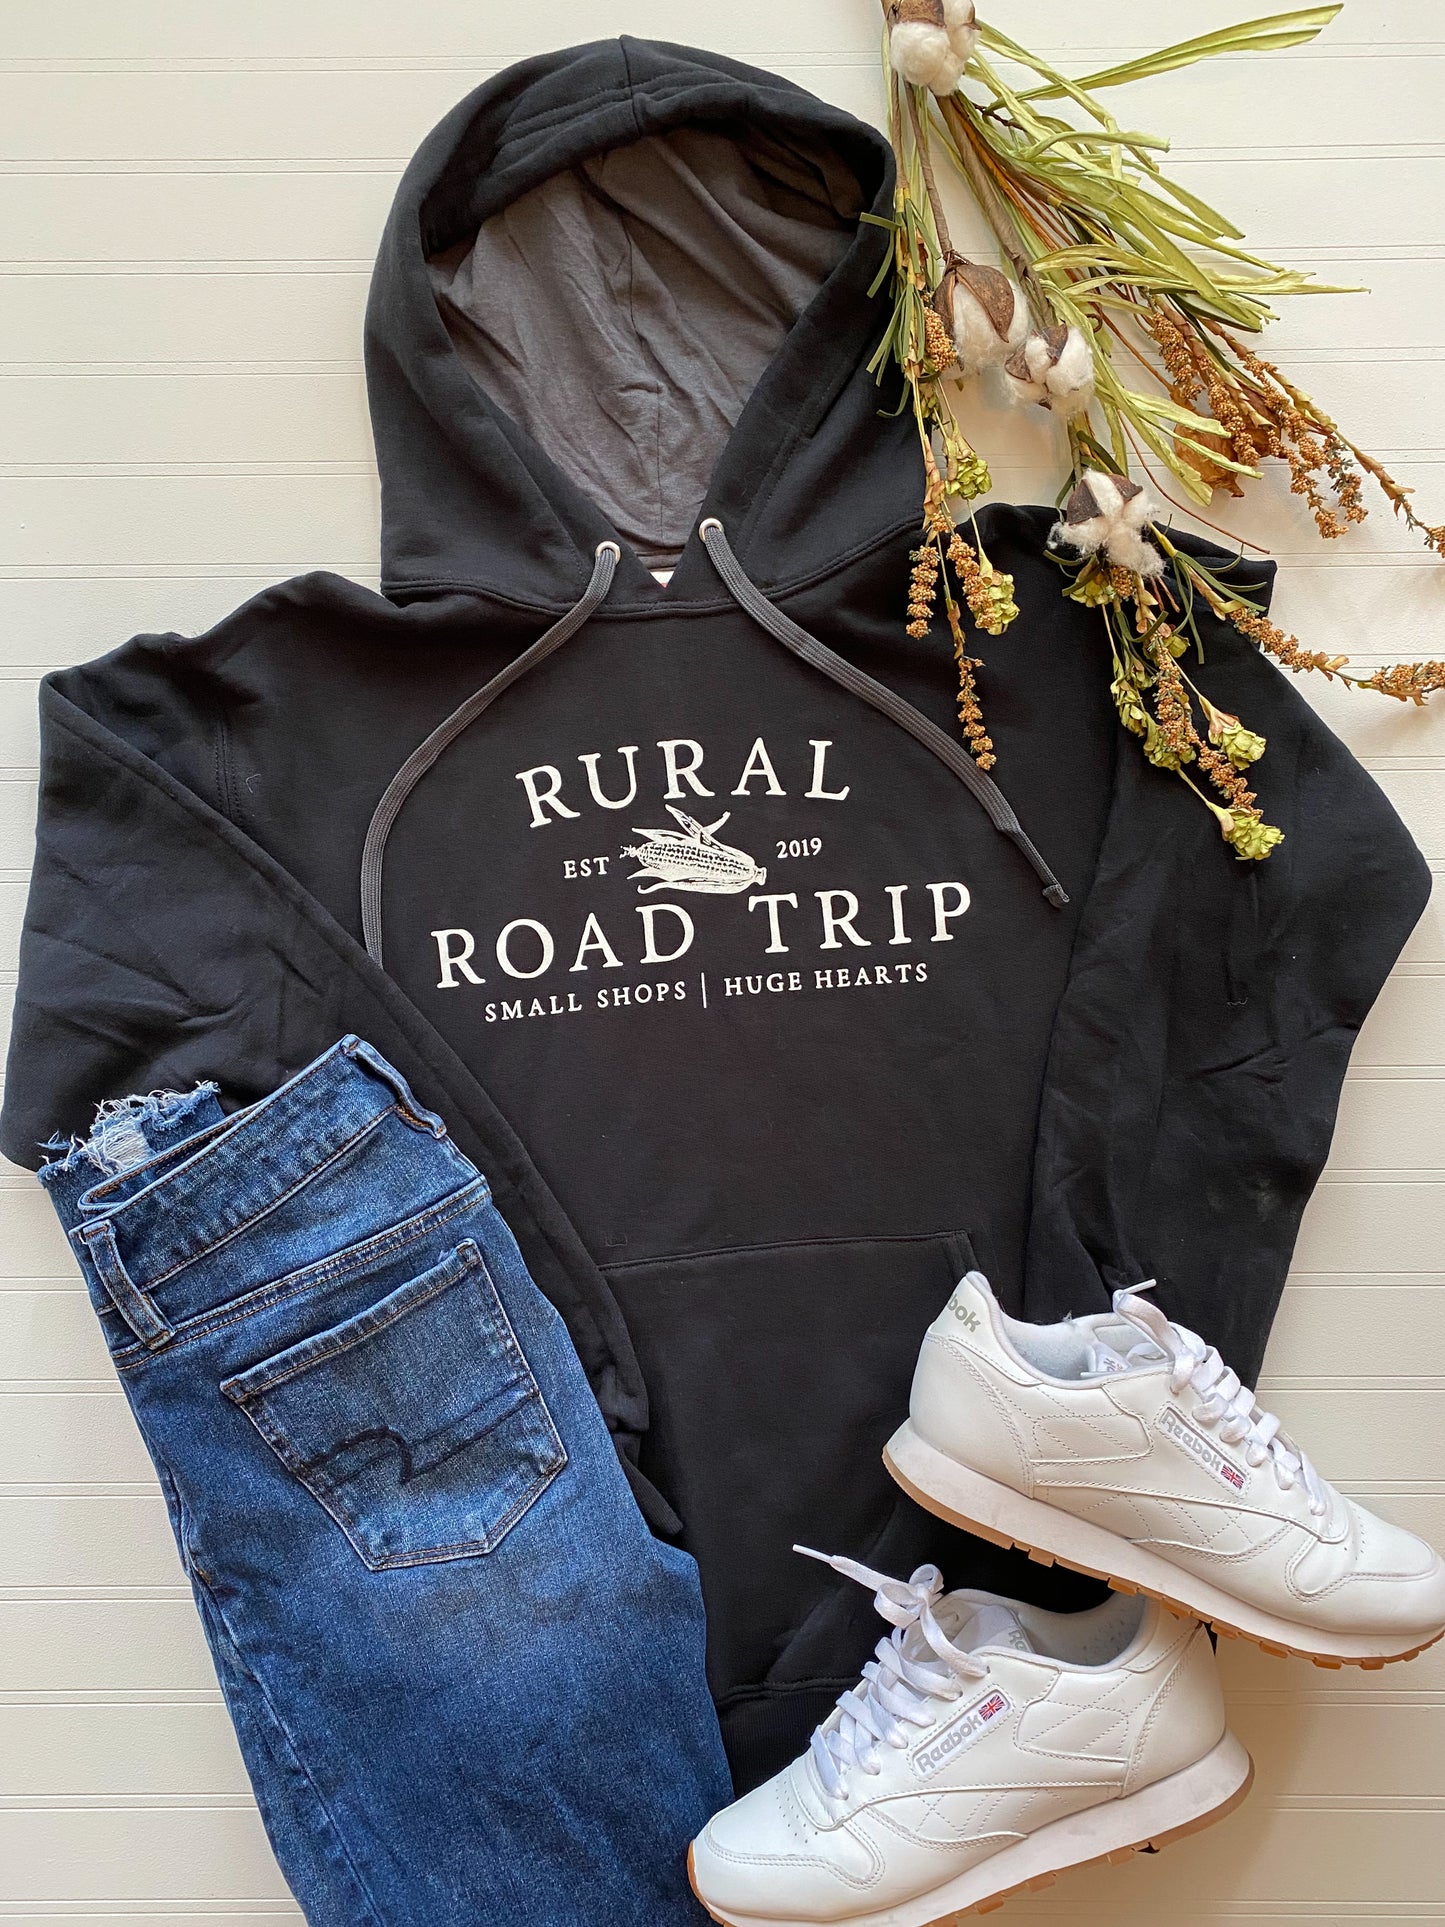 Rural Road Trip Shirts